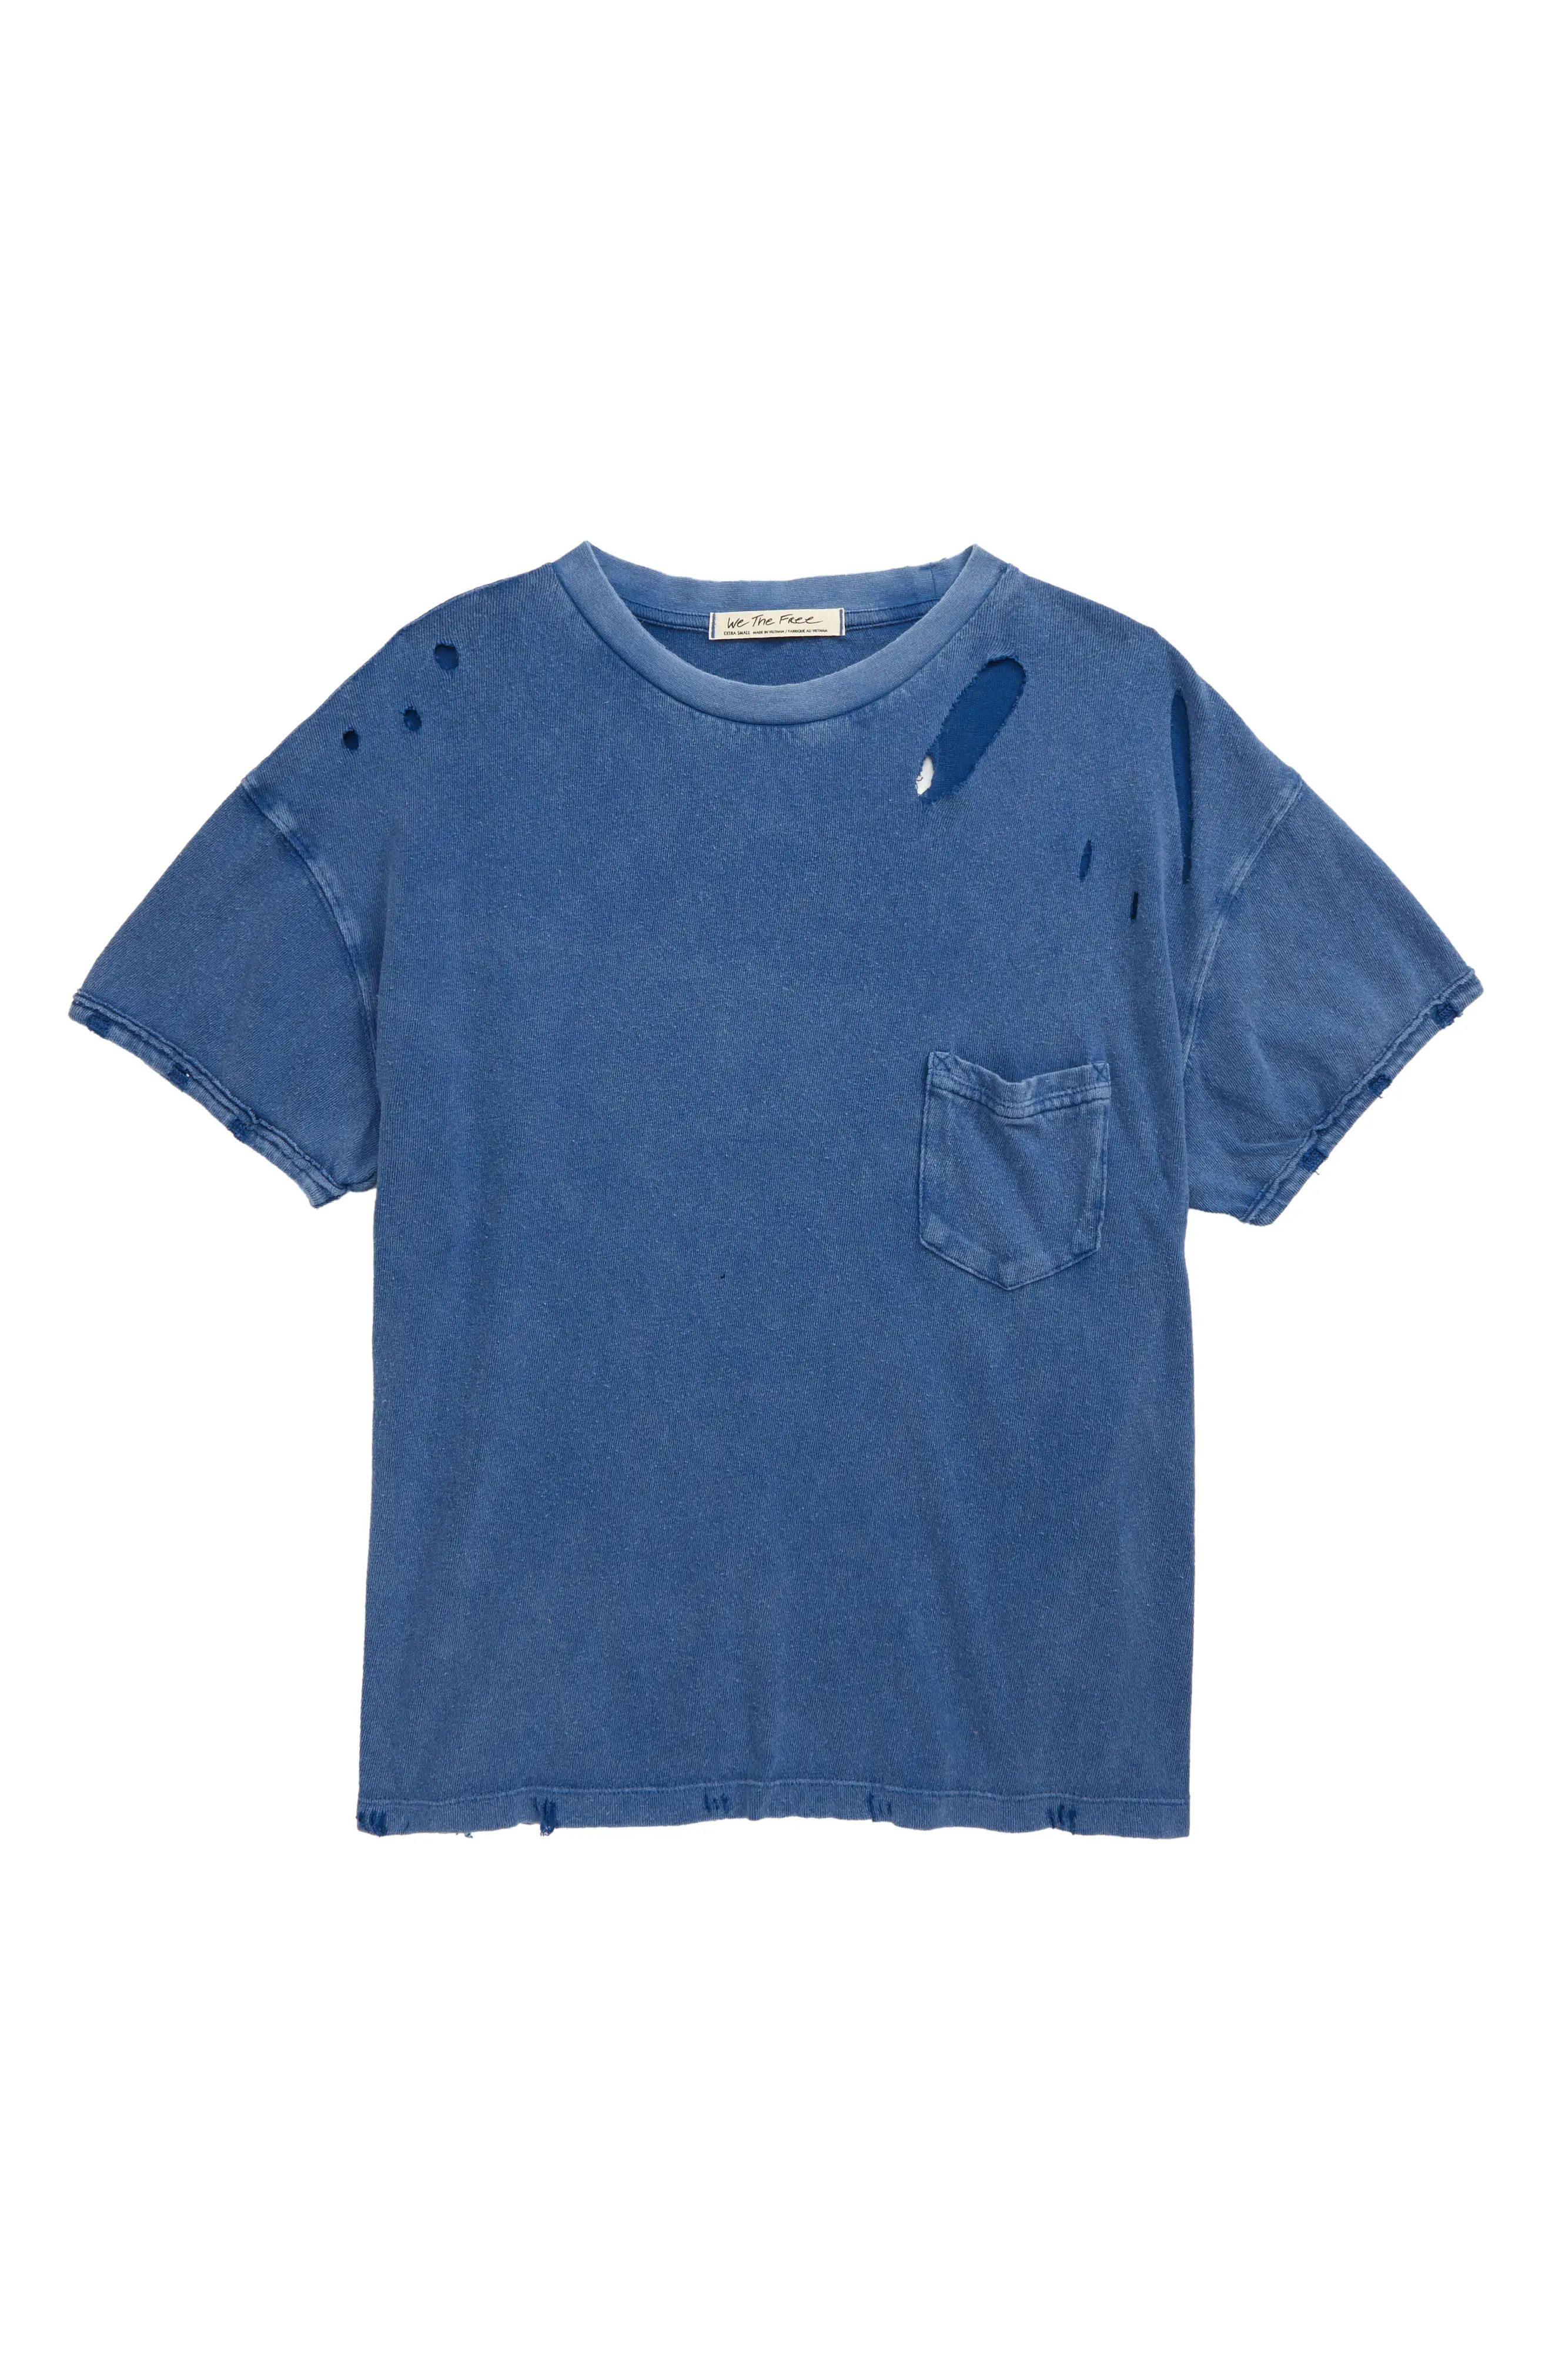 Women's Free People Rubi Ripped Pocket T-Shirt, Size Medium - Blue | Nordstrom